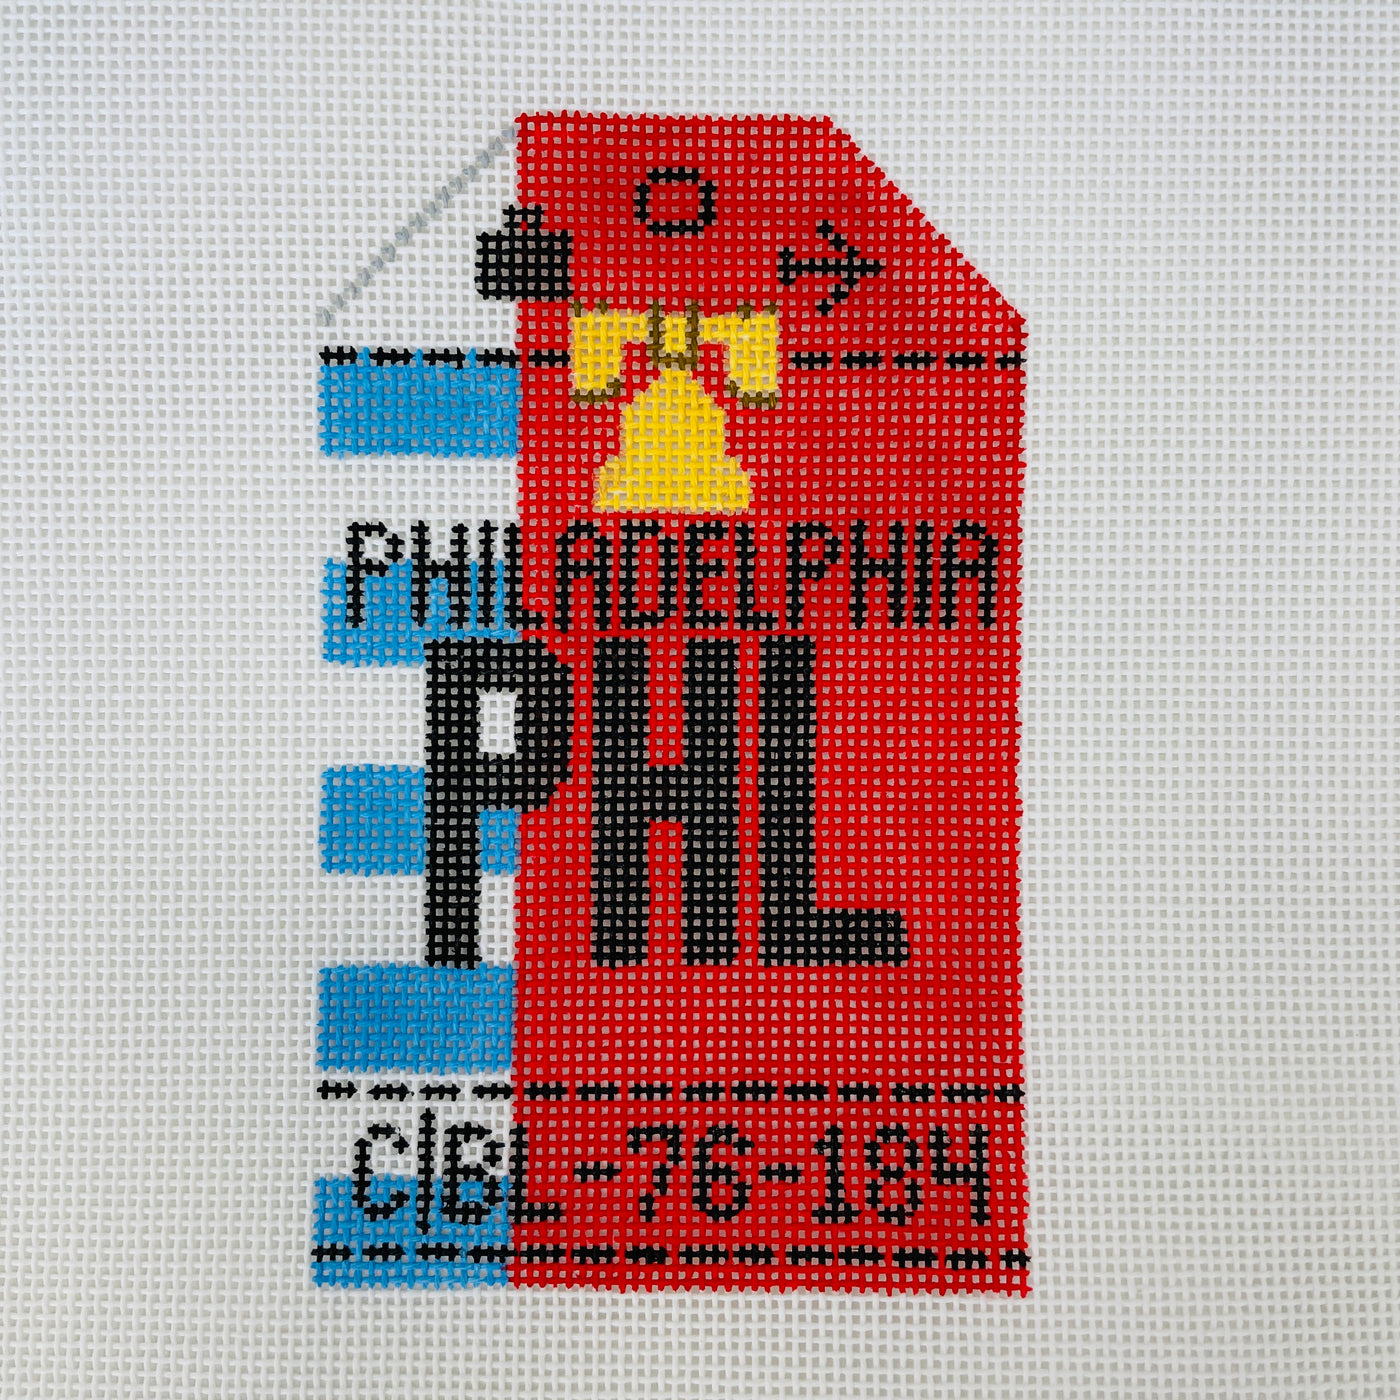 Philadelphia Travel Tag Needlepoint Canvas